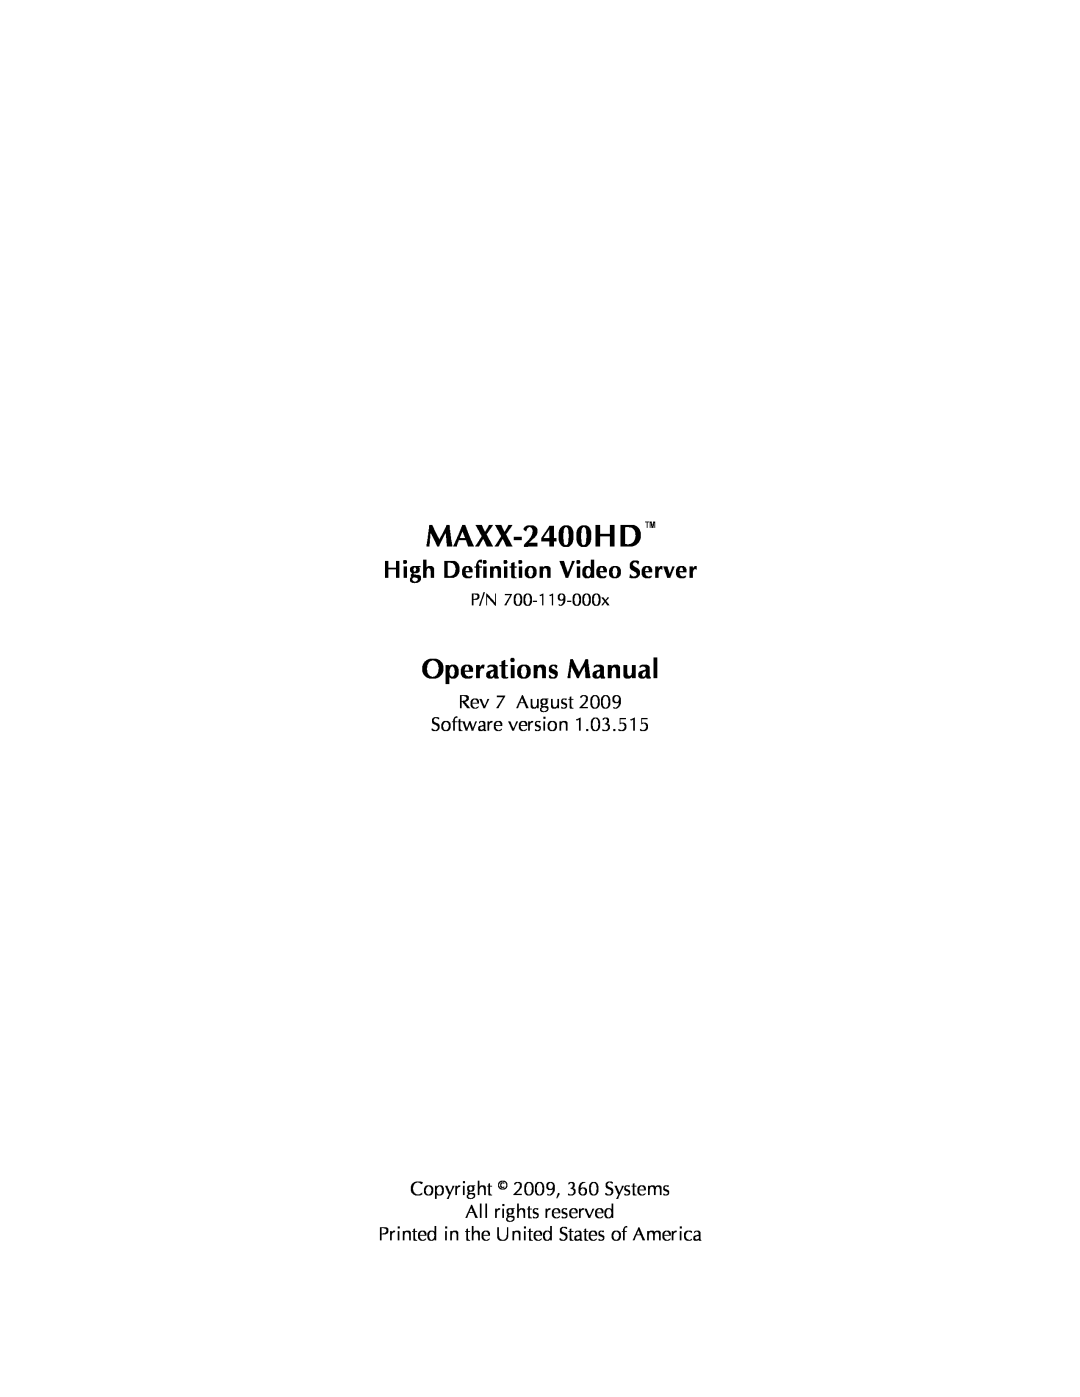 Maxxsonics MAXX-2400HD manual High Definition Video Server, Operations Manual 